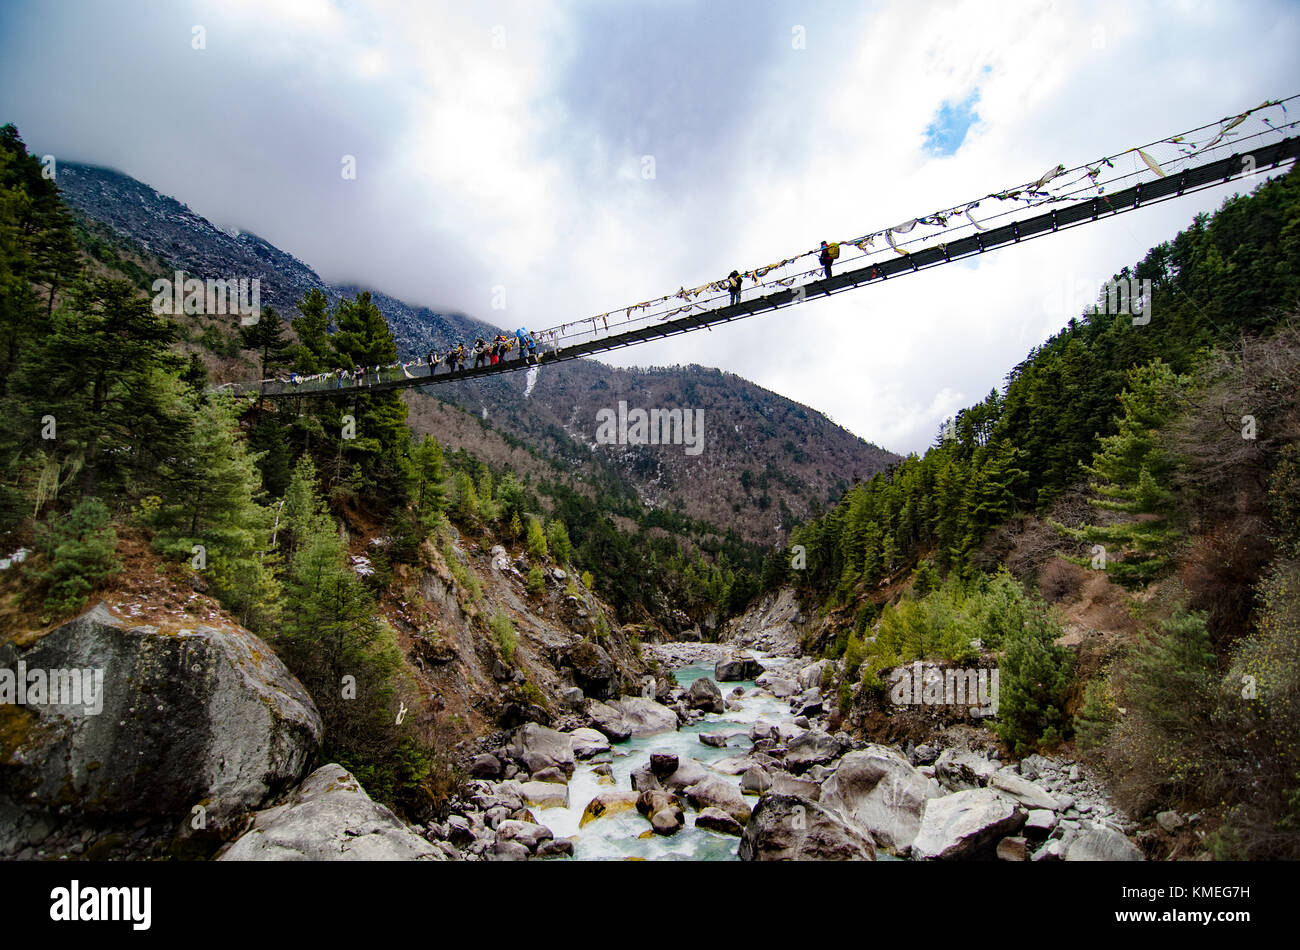 Trekkers crossing suspension bridge hanging over rocks and stream, Solukhumbu, Nepal Stock Photo